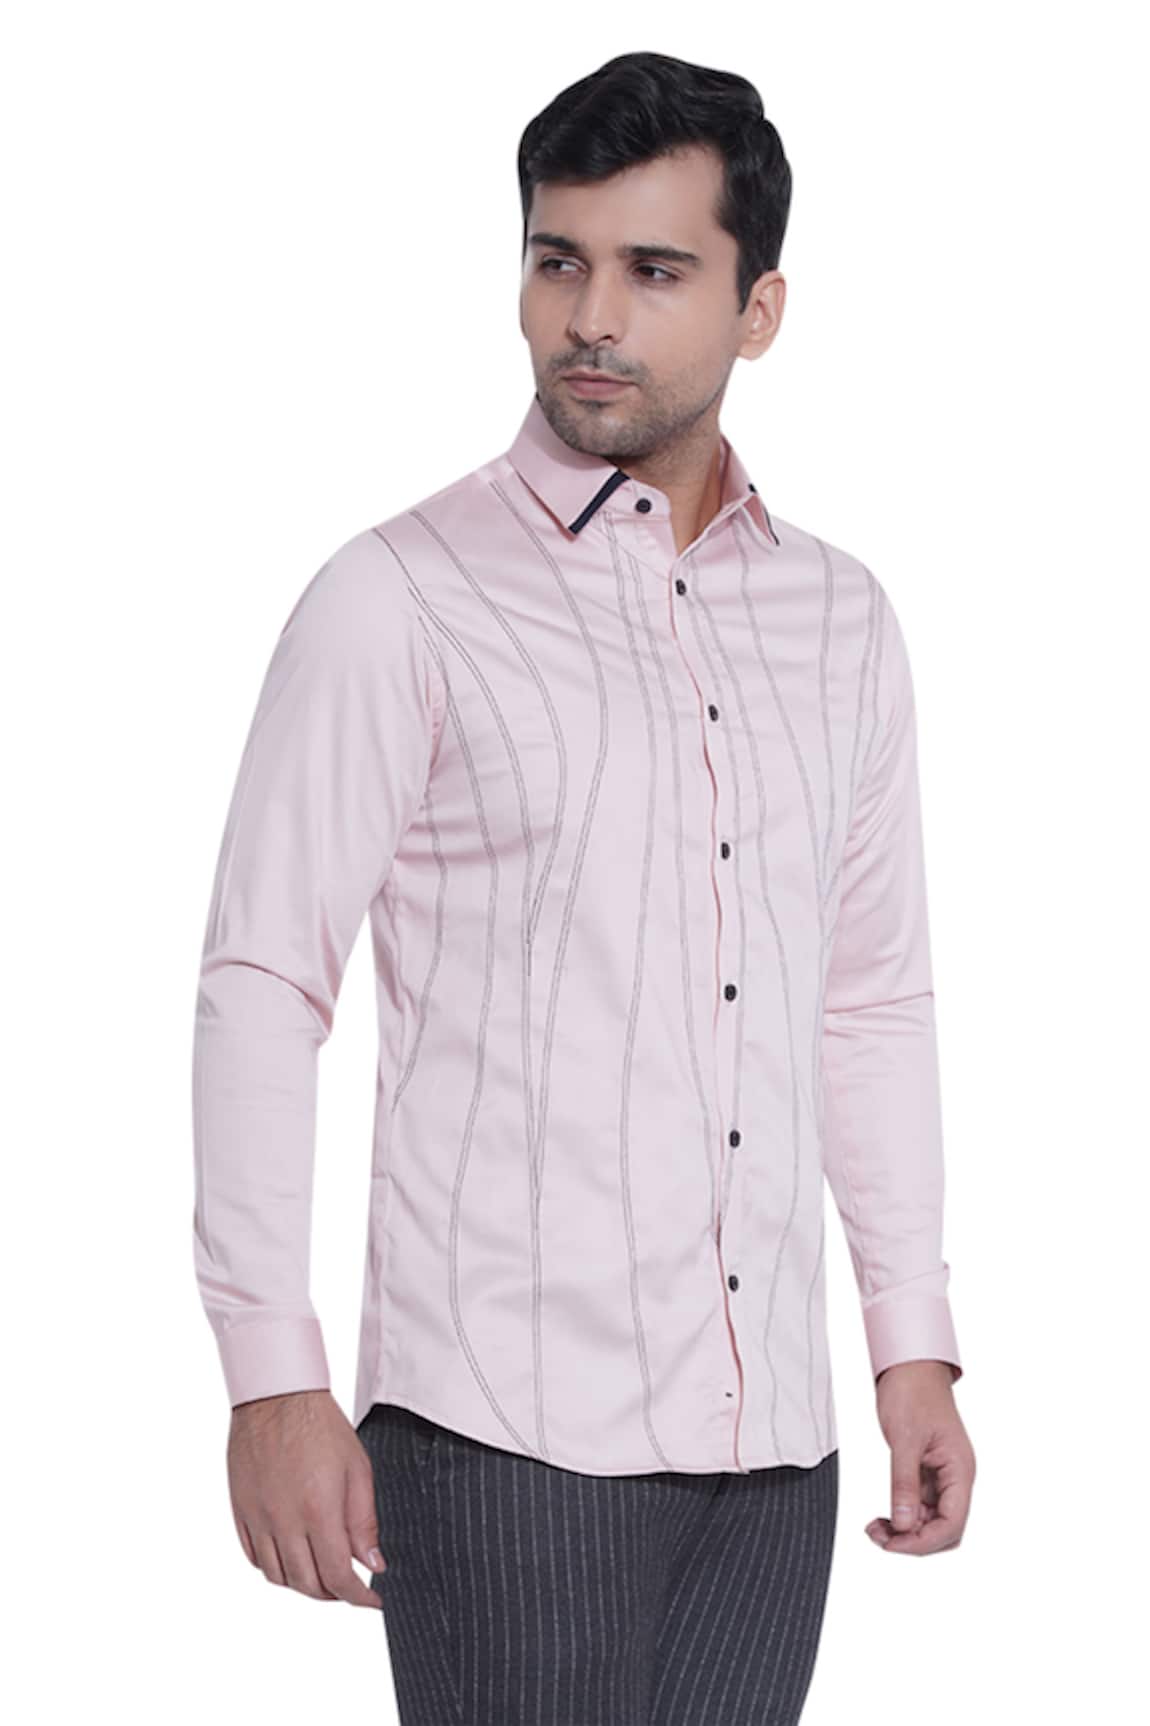 Abkasa Slim-Fit Cotton Shirt